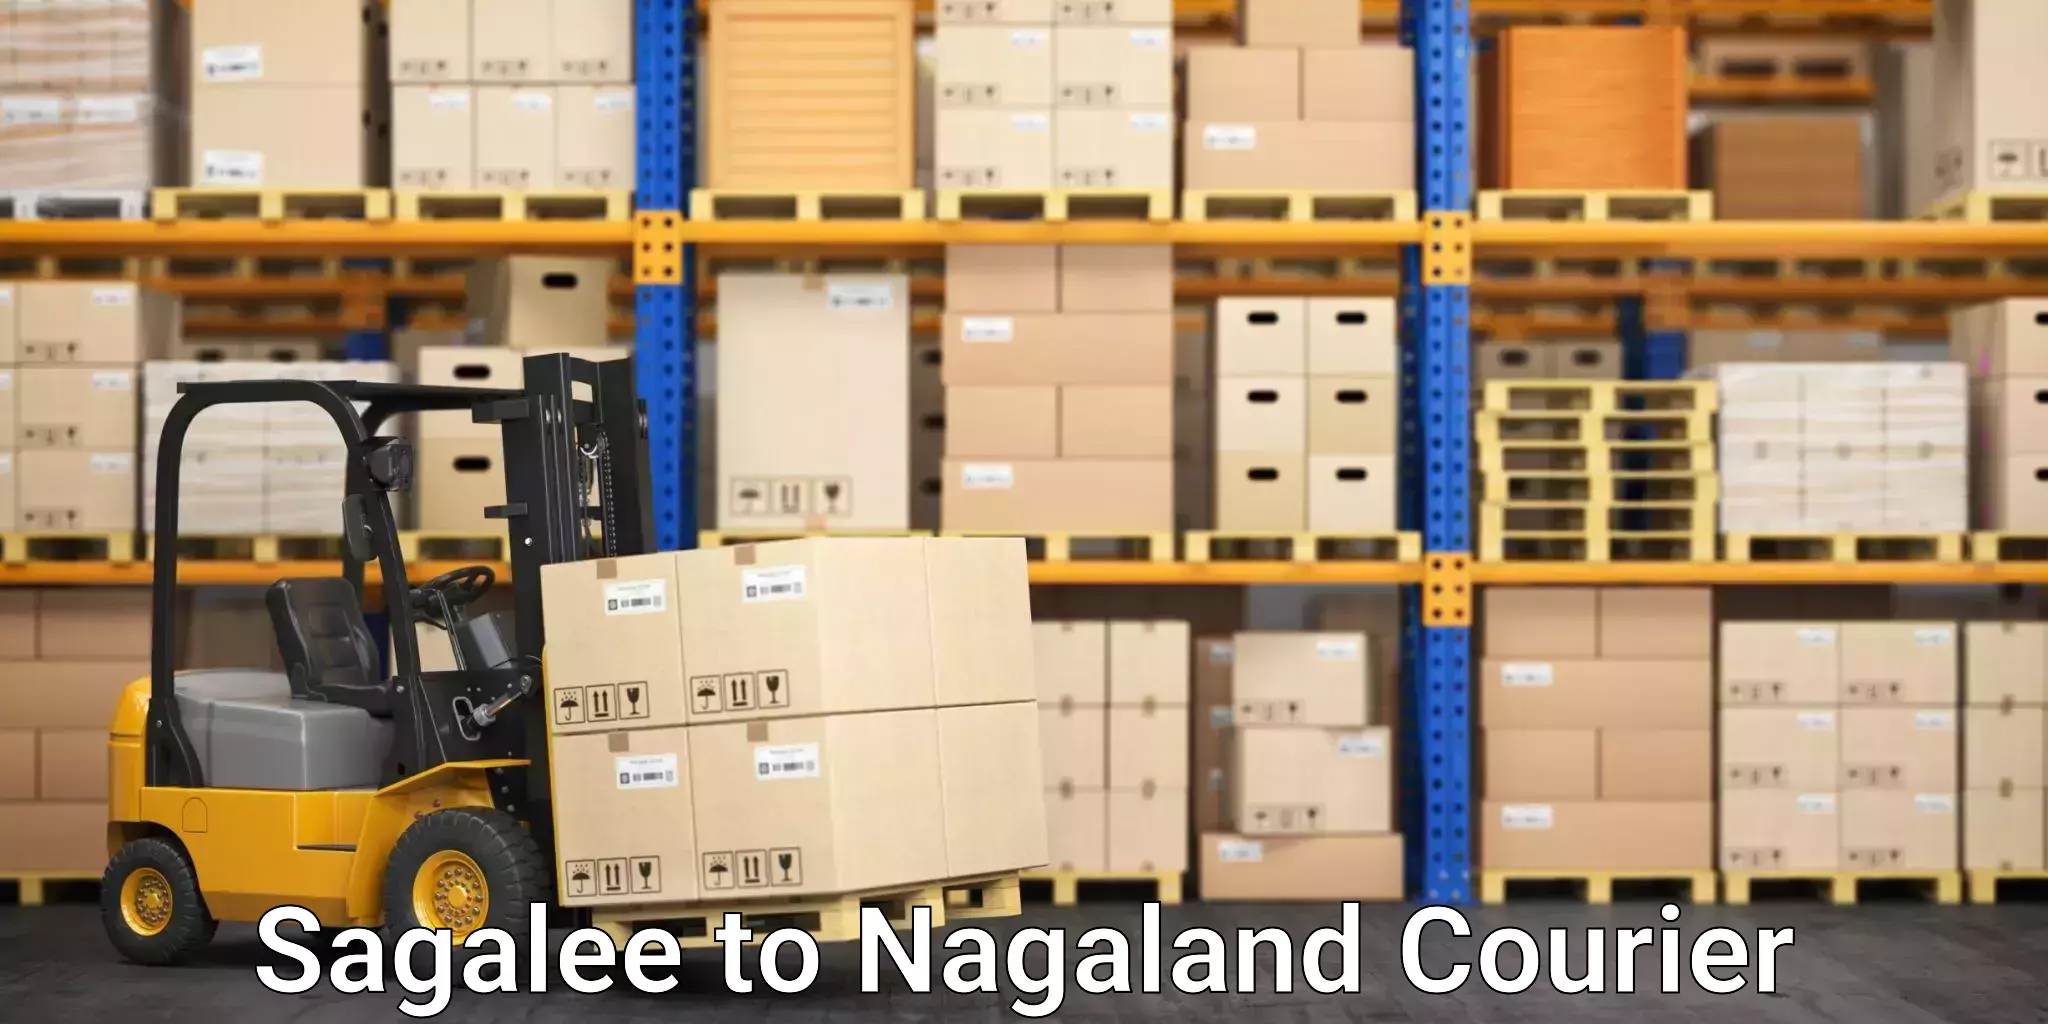 Courier service comparison Sagalee to Nagaland